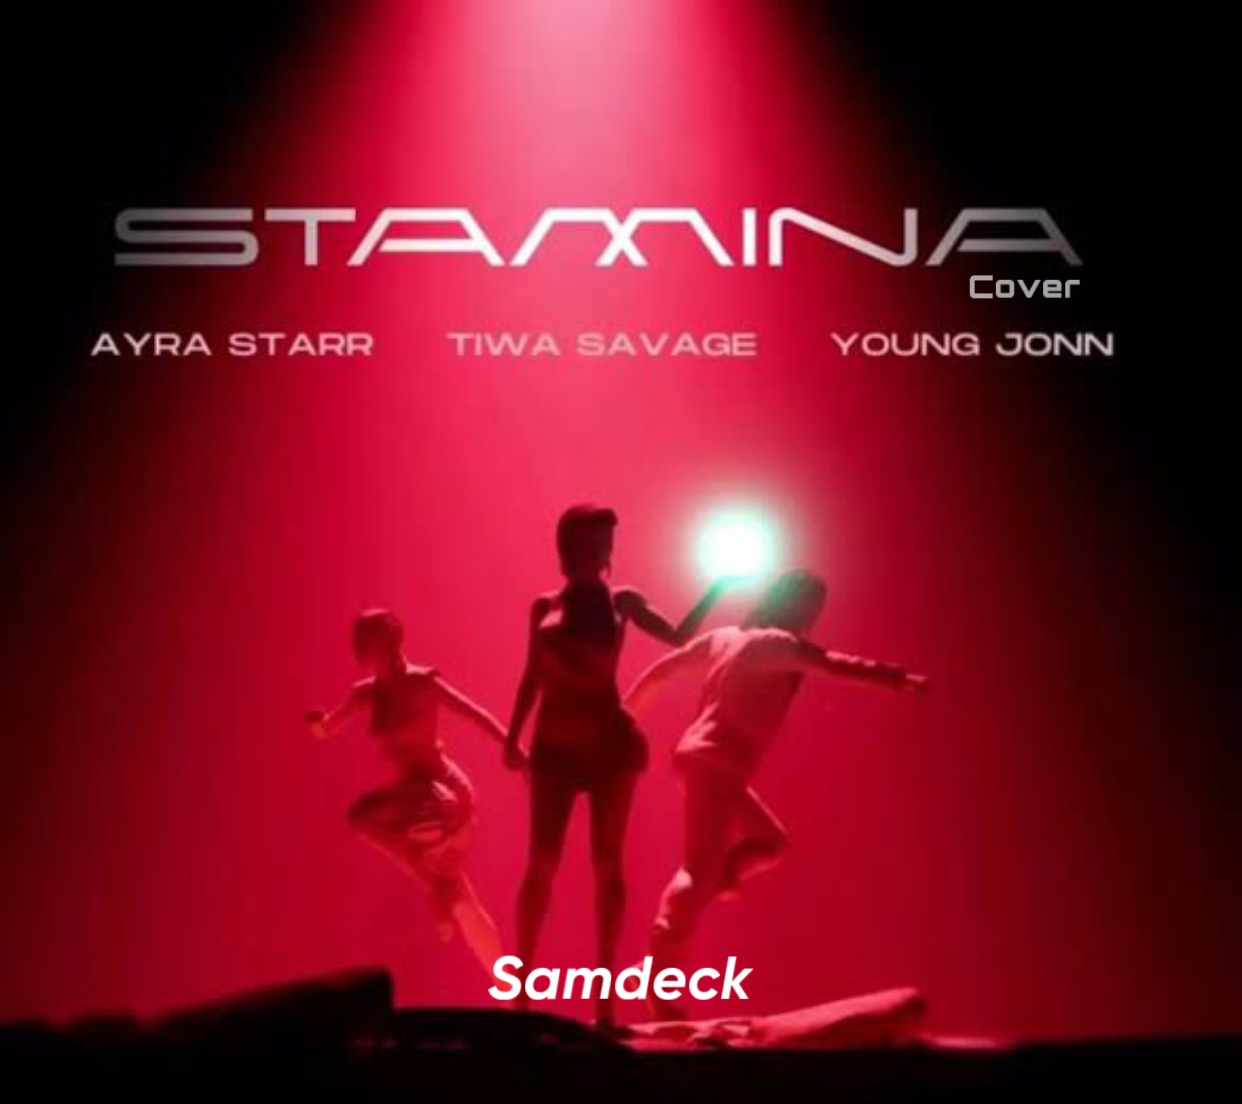 Samdeck - Stamina (Cover) ft Tiwa Savage, Ayra Starr & Young John